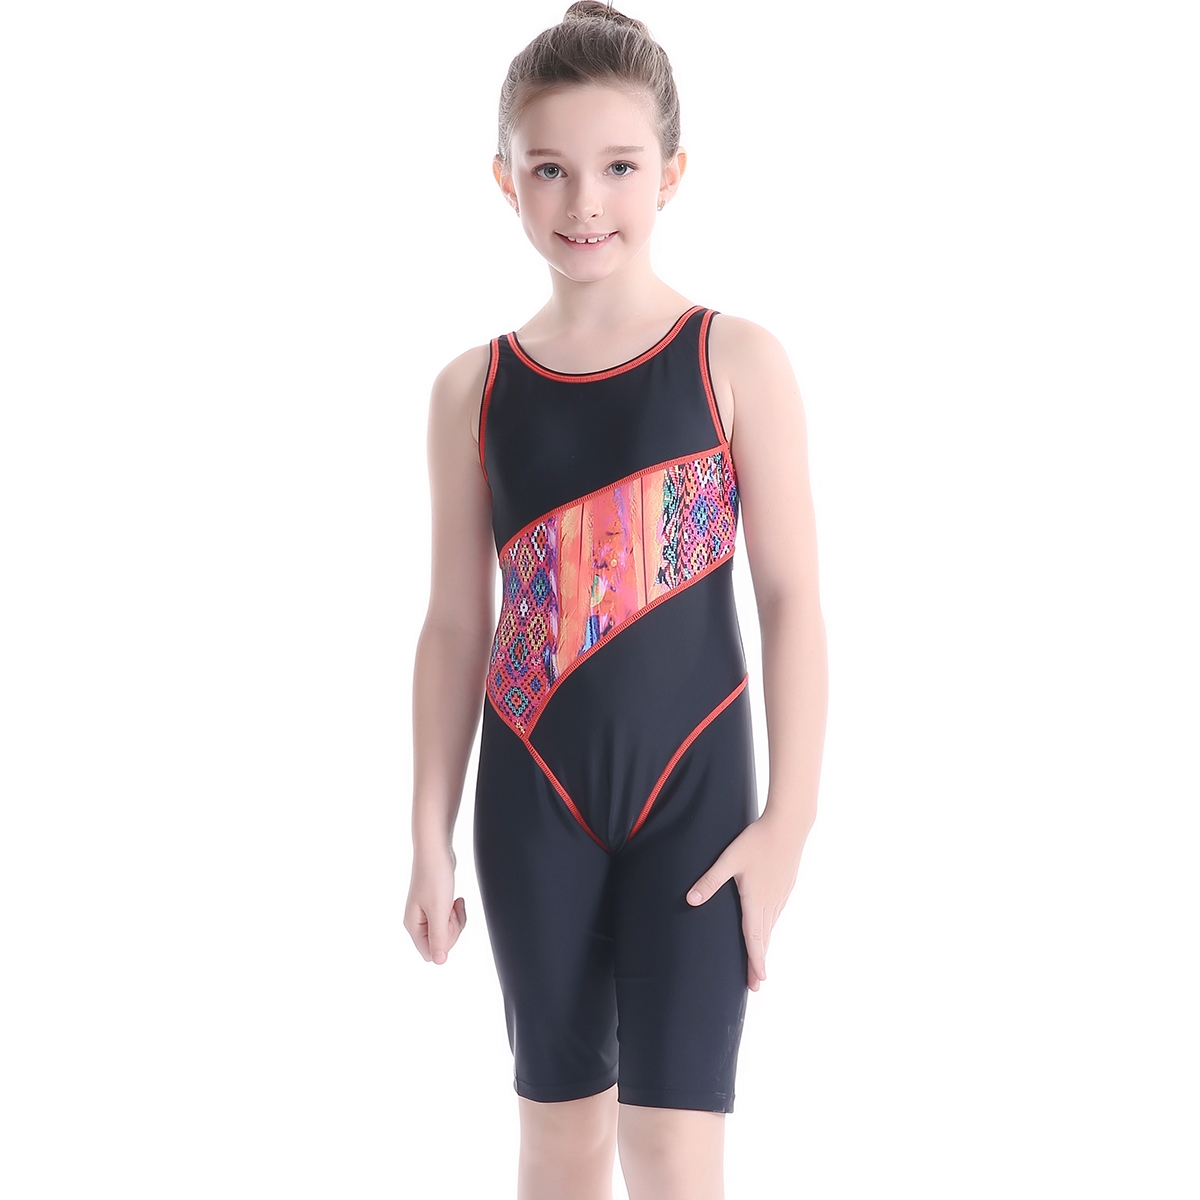 Swimming training suit uniform child girl swimwear